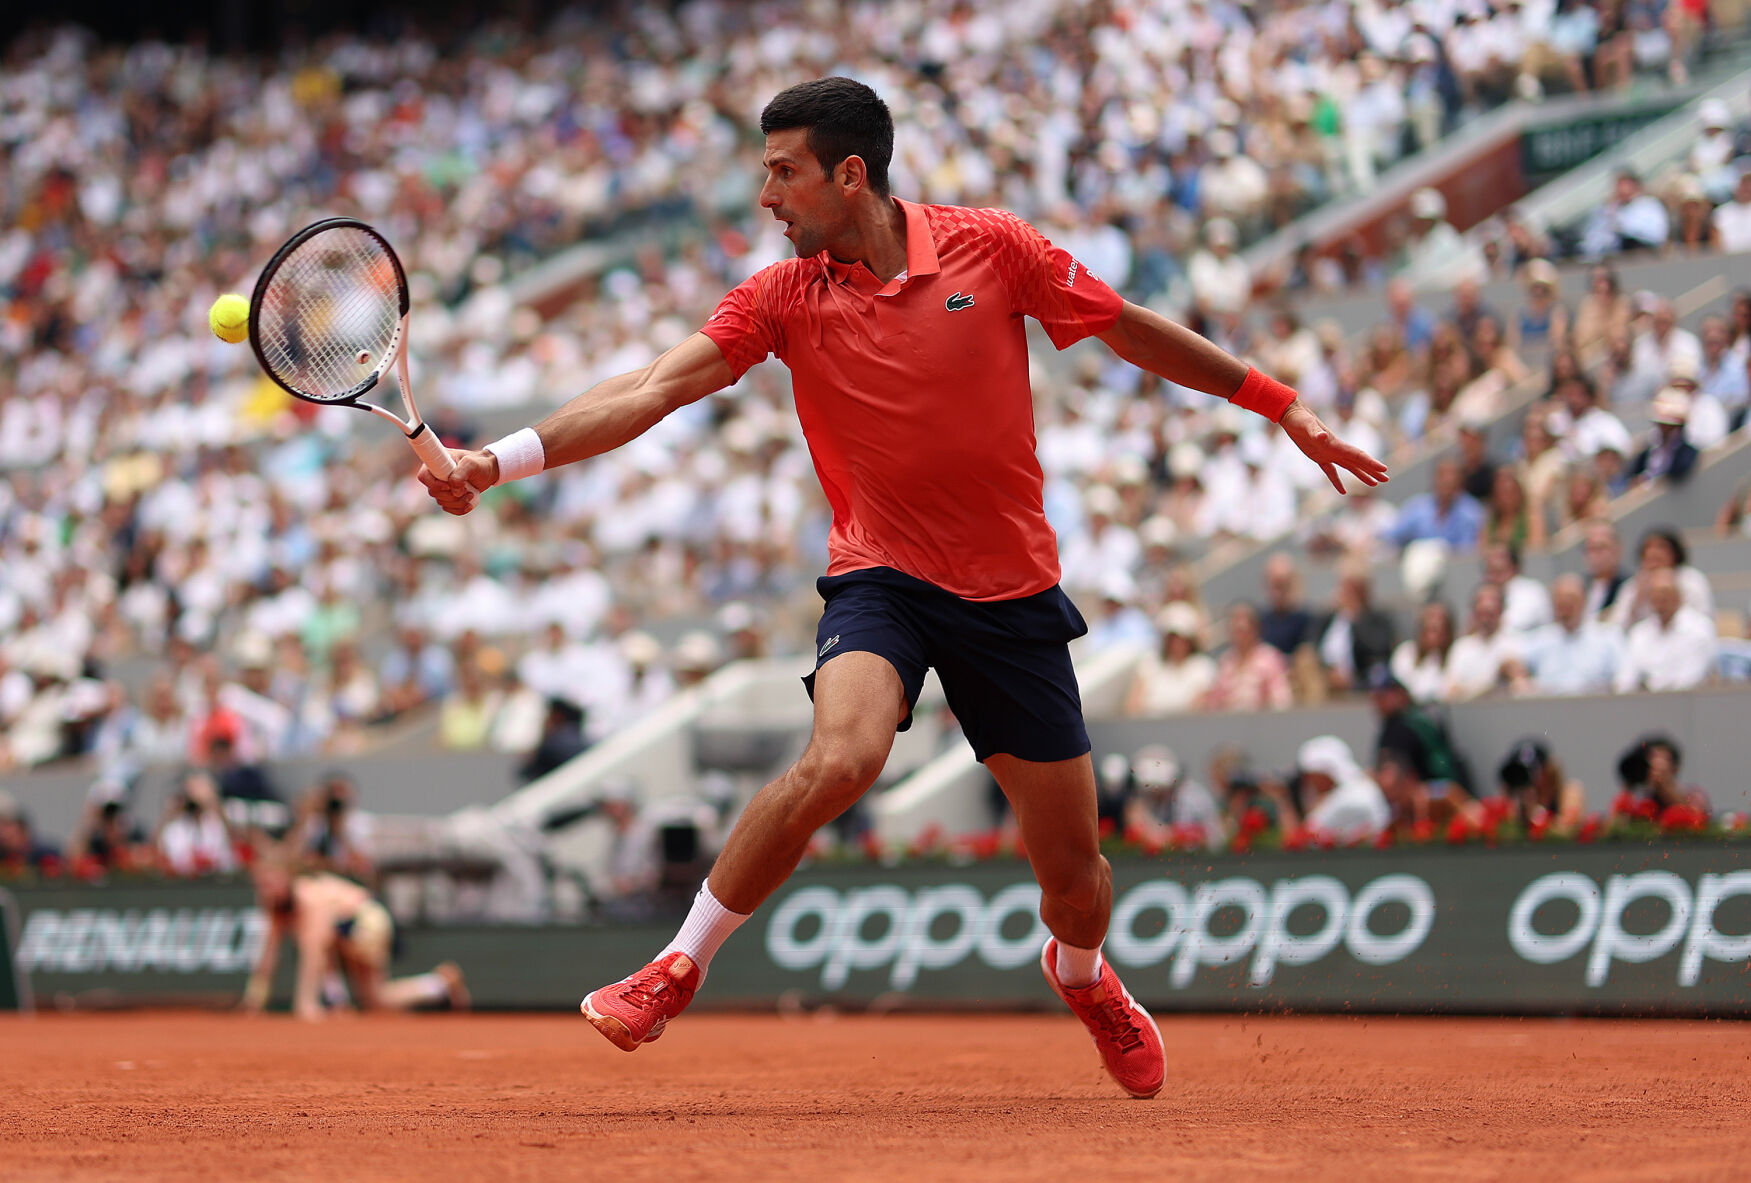 Novak Djokovic has 23 Slams, so is he the GOAT? He leaves that debate to others National bradfordera